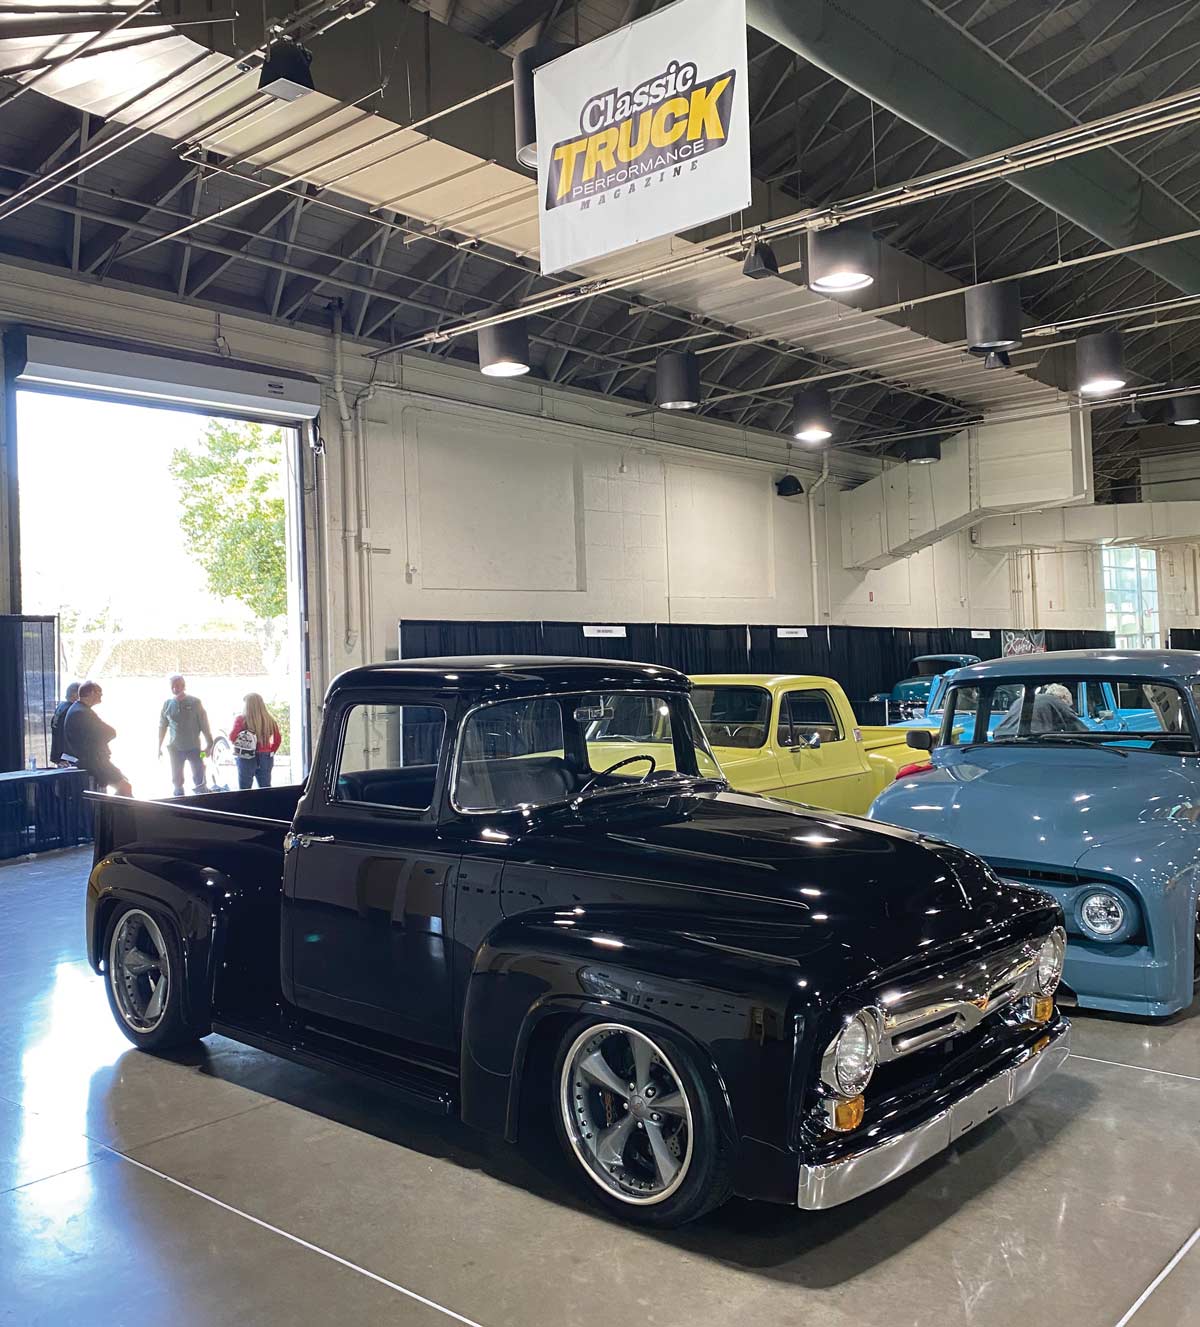 Classic black chevy pickup truck